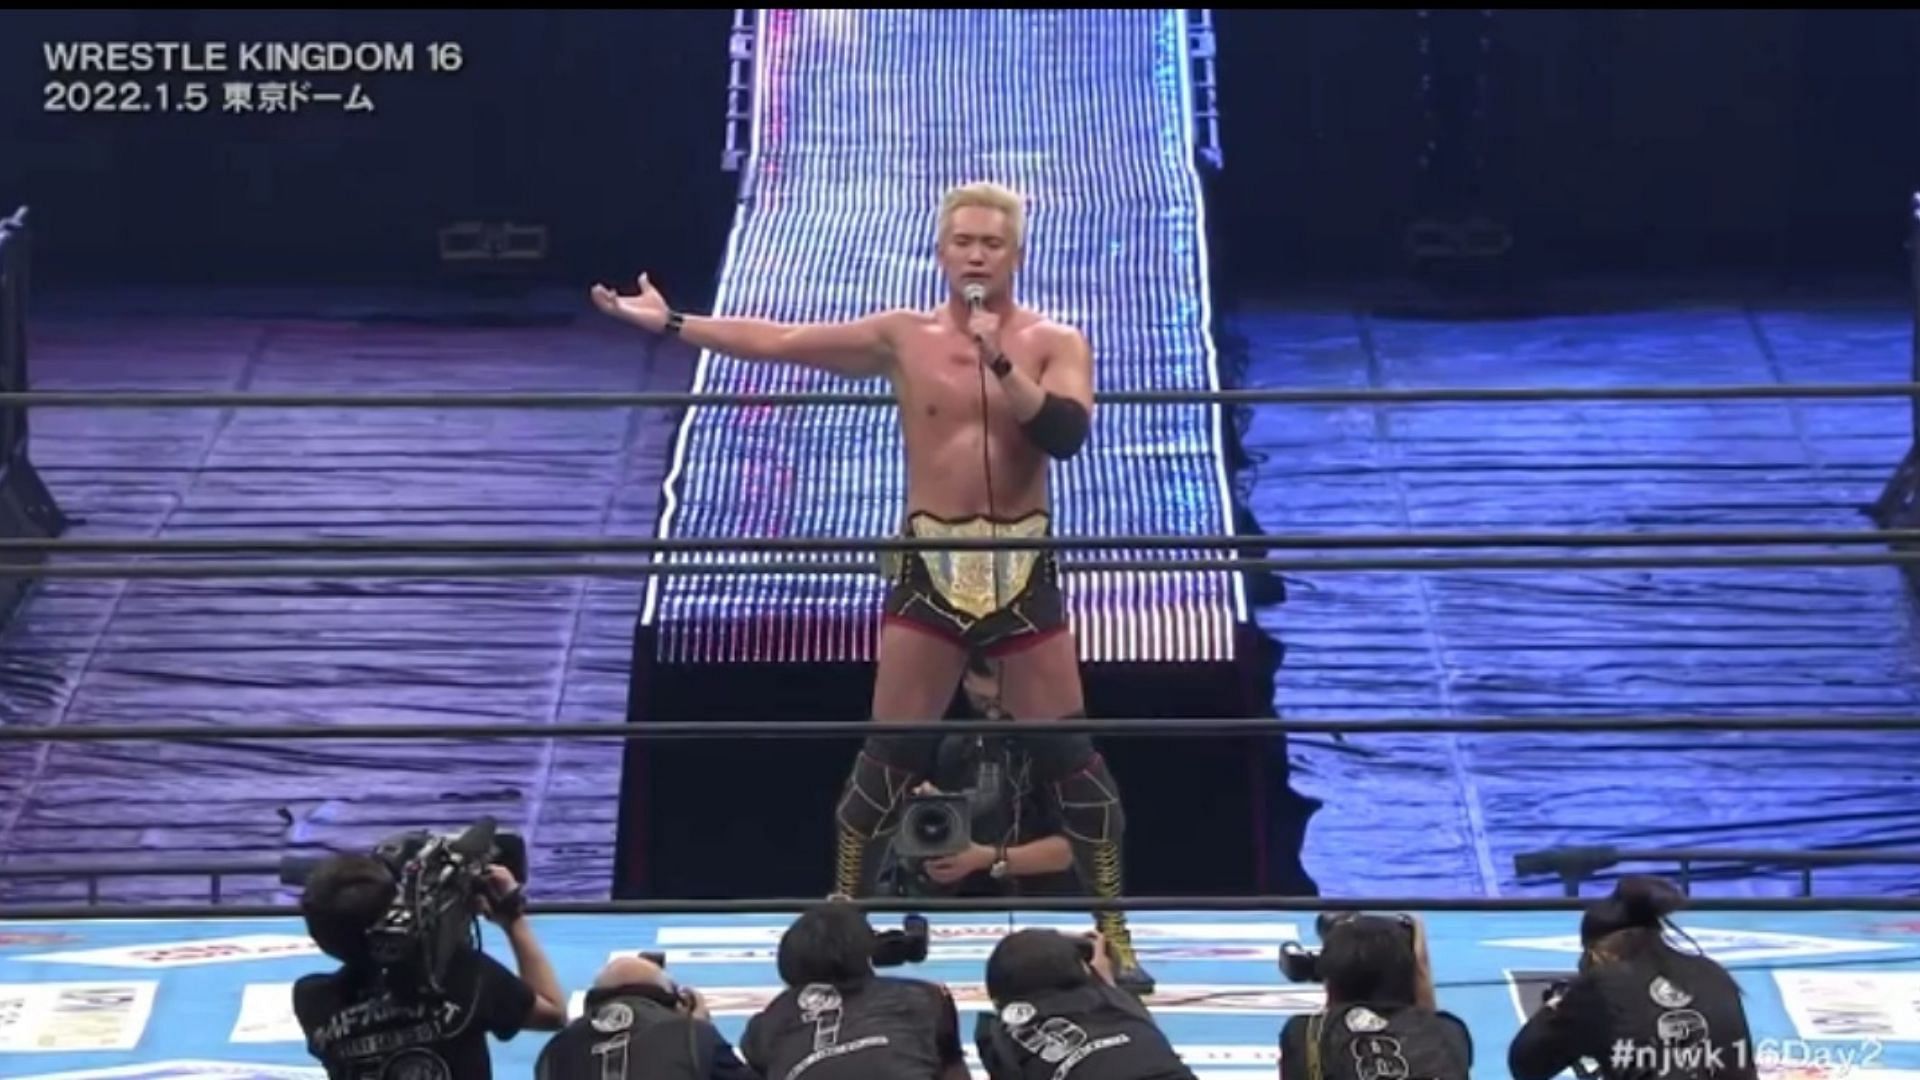 Okada is set to defend the IWGP World Heavyweight Title against Tetsuya Naito.